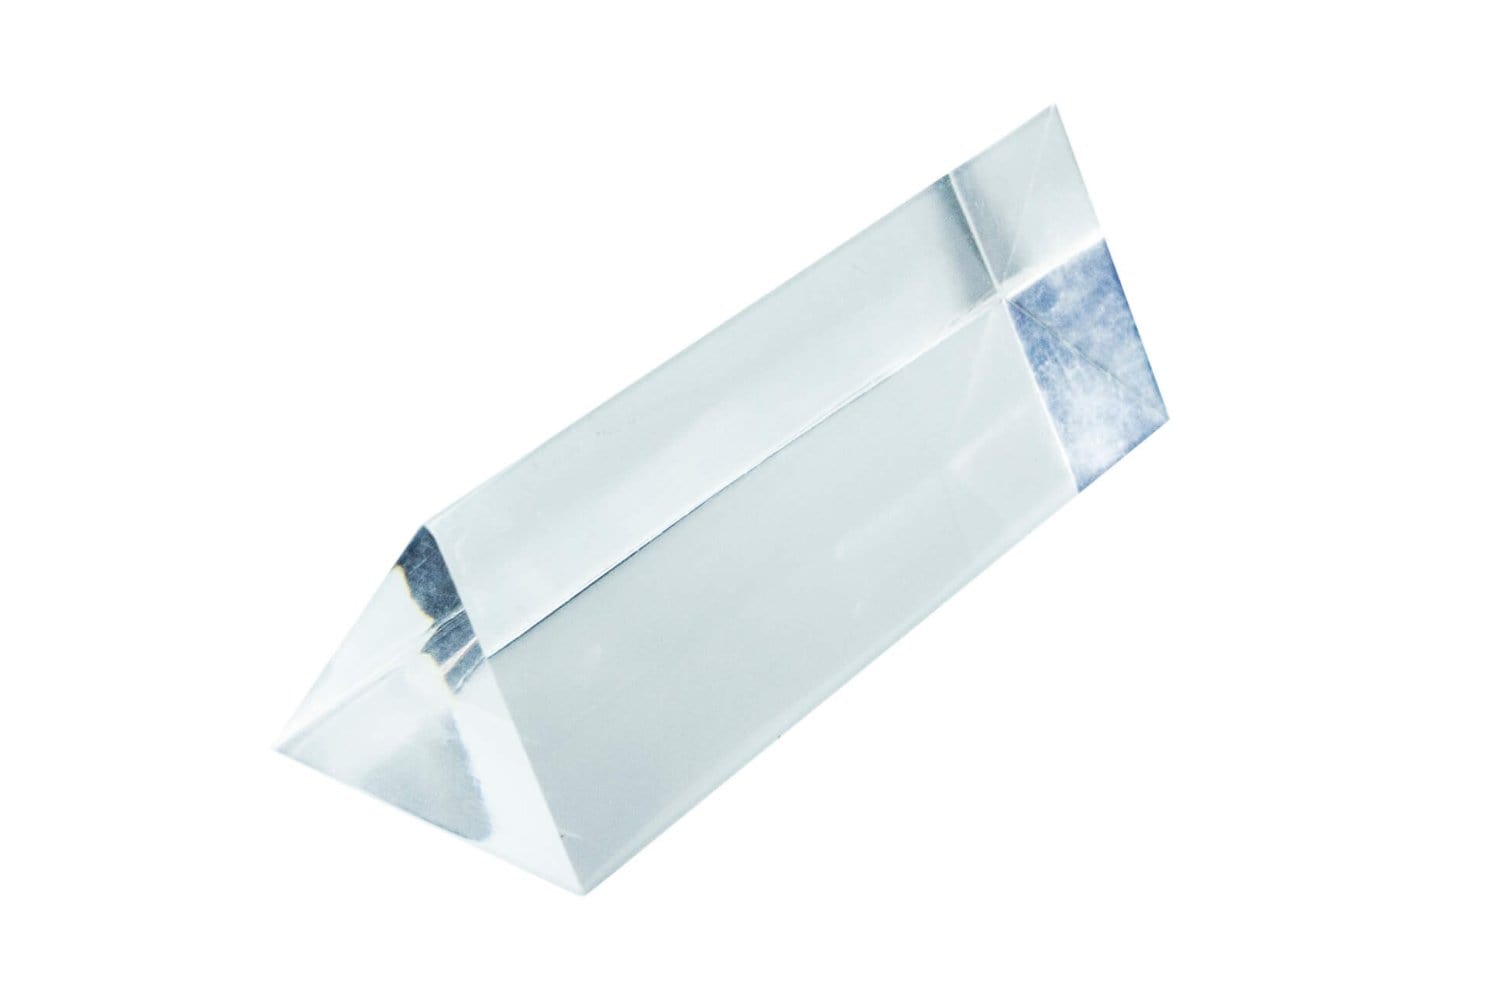 Arbor Scientific Equilateral Glass Prism